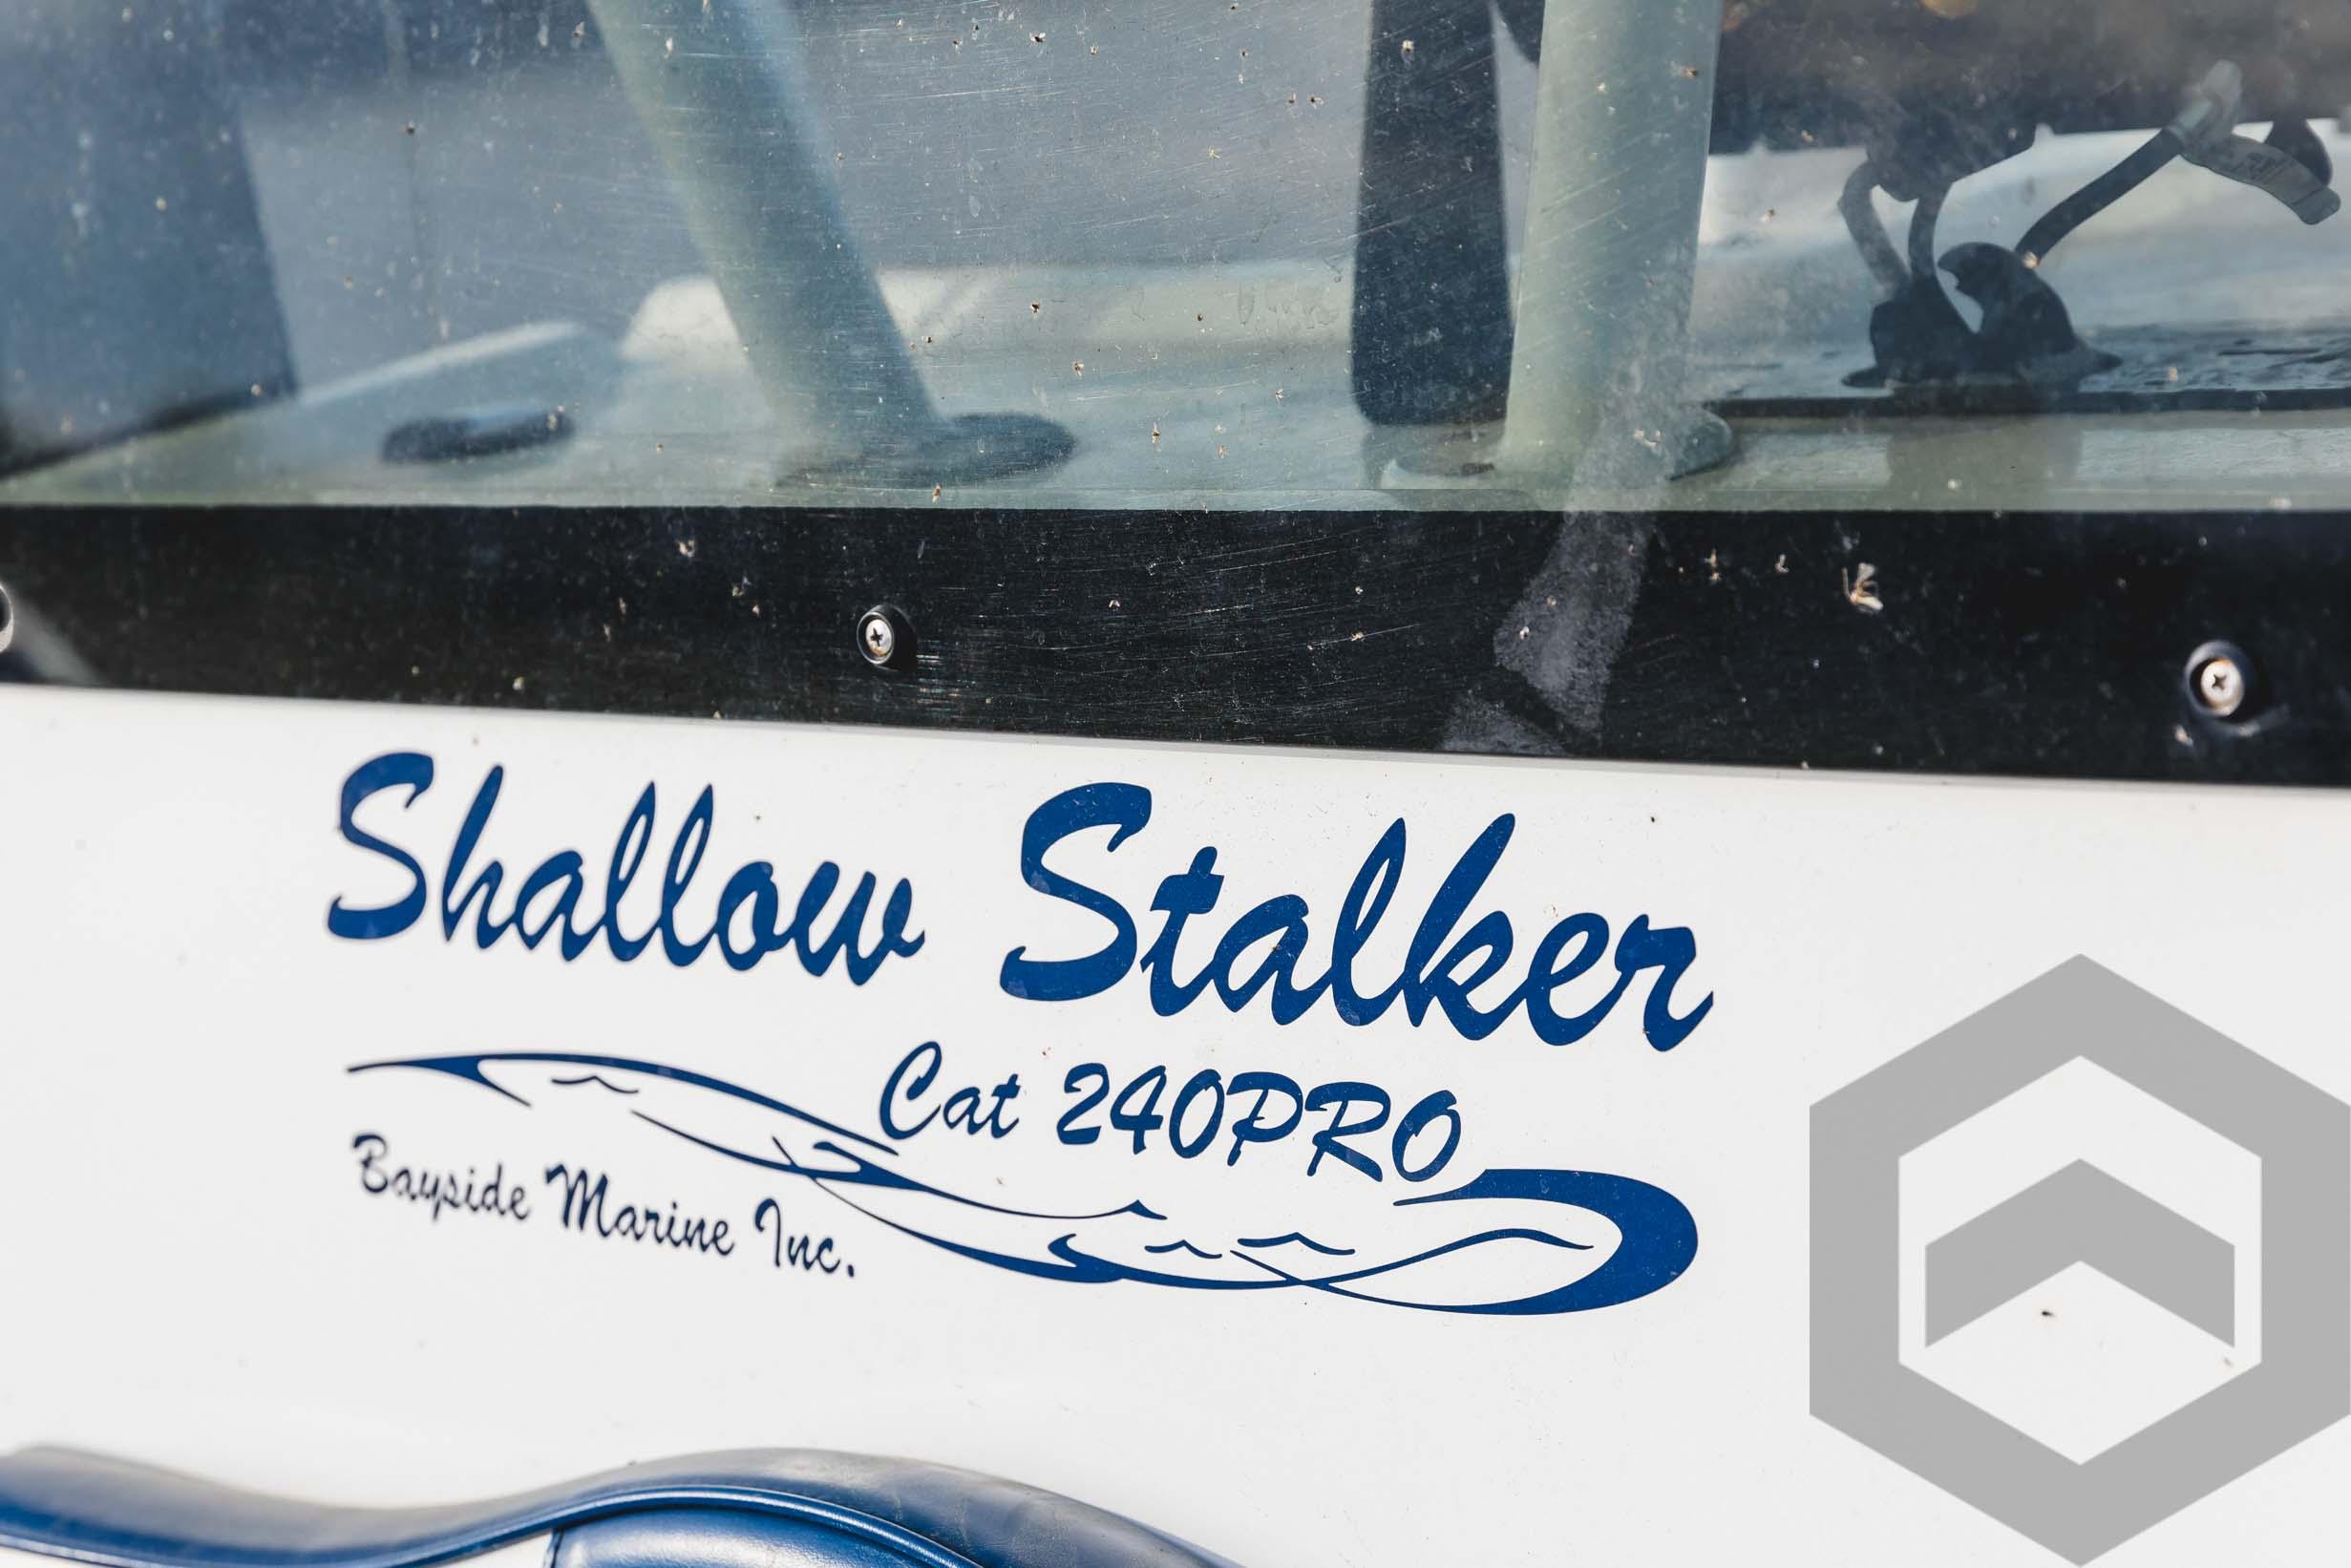 2018 Shallow Stalker Cat 240 Pro